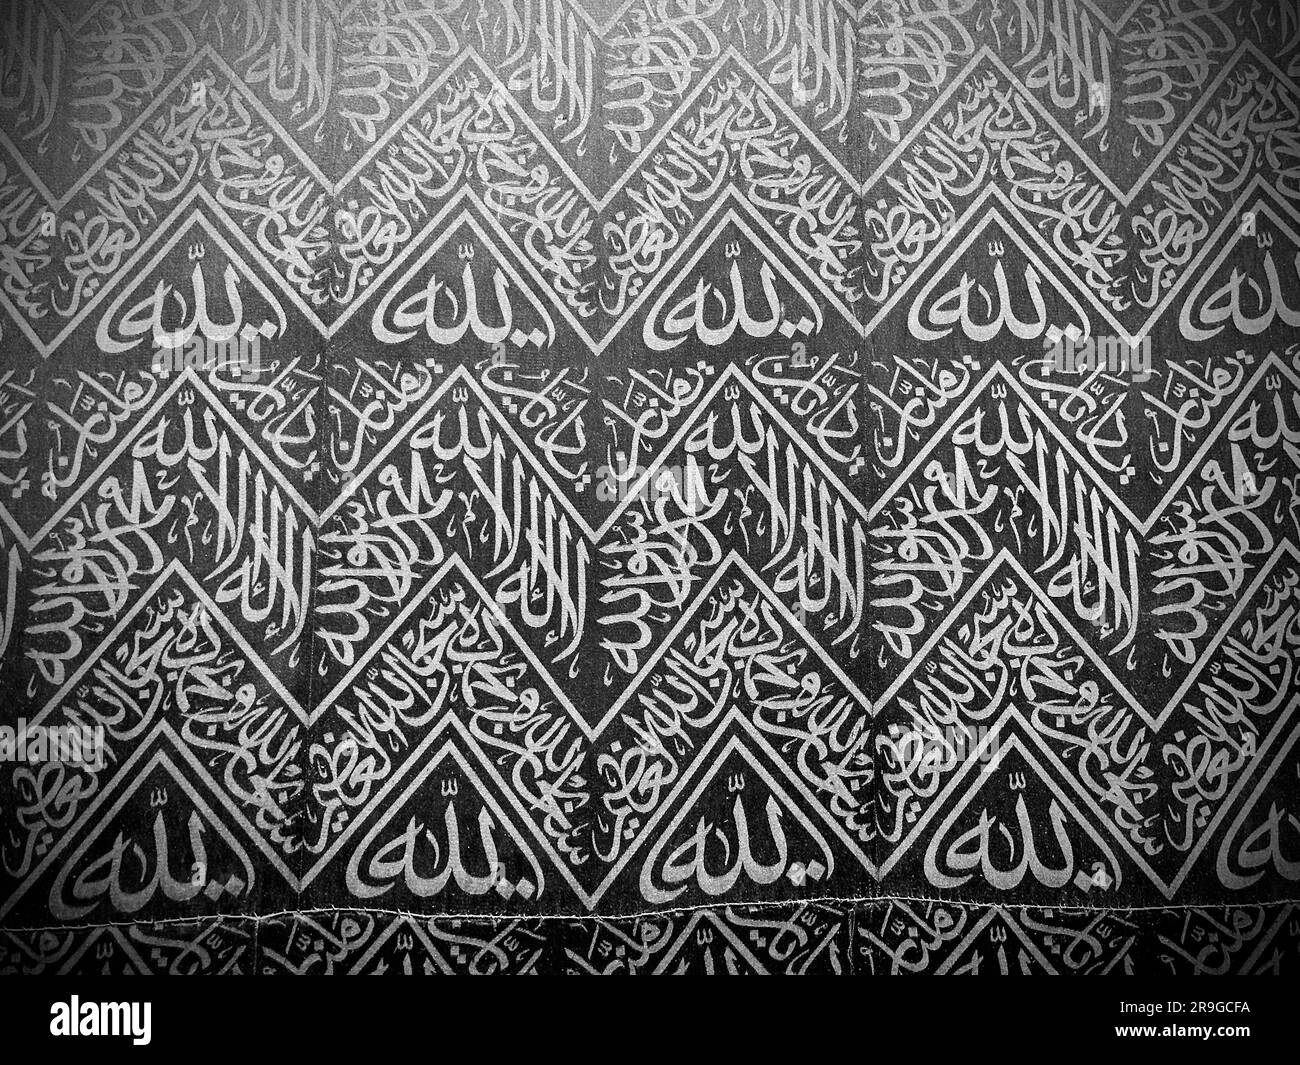 Arabische kalligraphische Inschriften und islamische Kunstdekoration am Al-Kaaba-Vorhang in der Al-Haram-Moschee - Mekka Saudi-Arabien - Hajj und umra Stockfoto